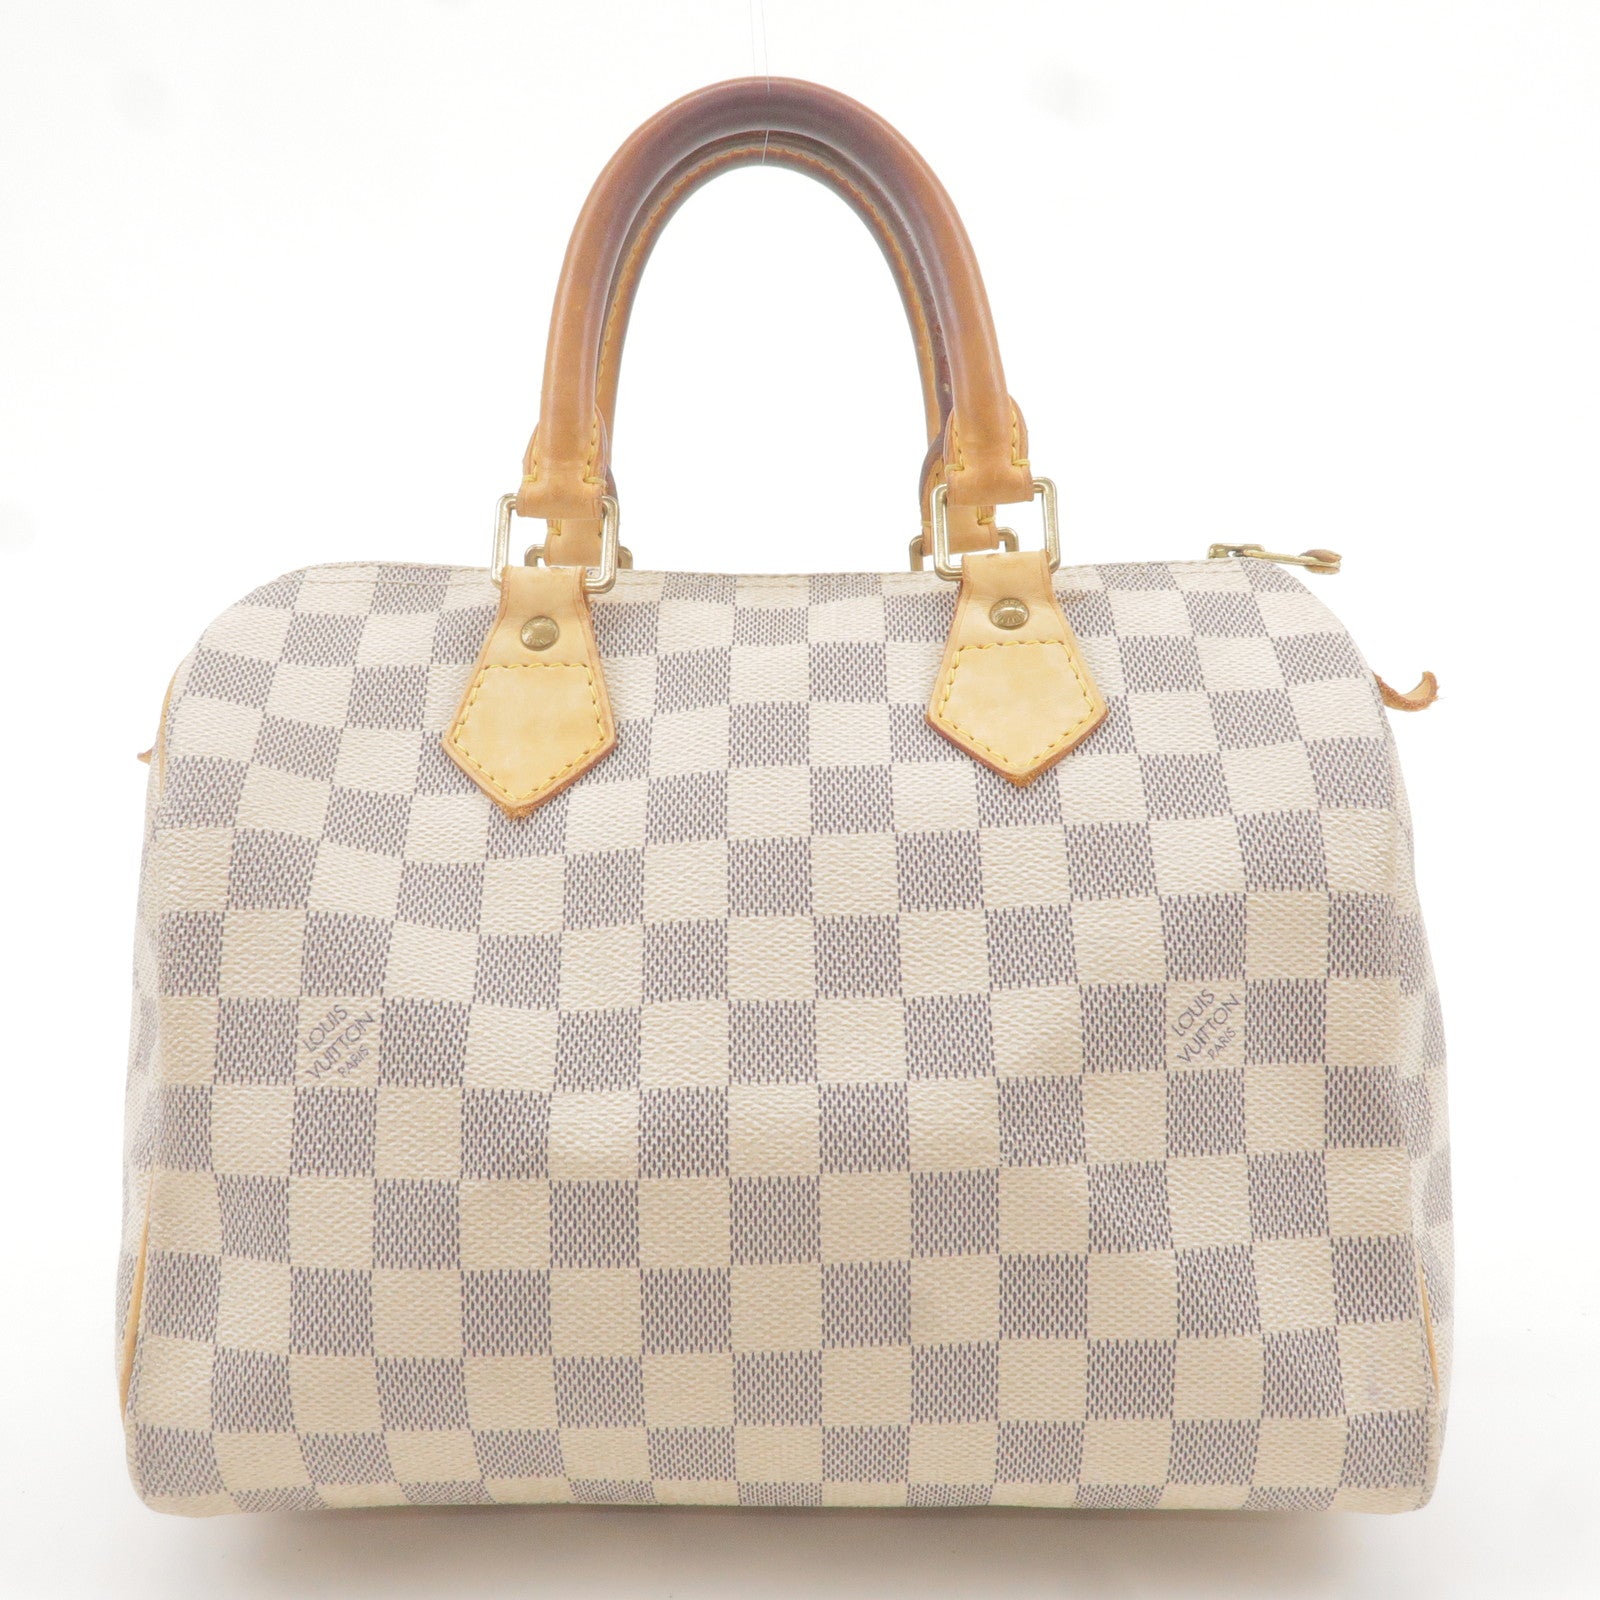 Damier - Louis - Vuitton - Boston - Brown Canvas Louis Vuitton Ellipse Bag  - N41534 – dct - Azur - Bag - 25 - ep_vintage luxury Store - Speedy - Bag -  Hand